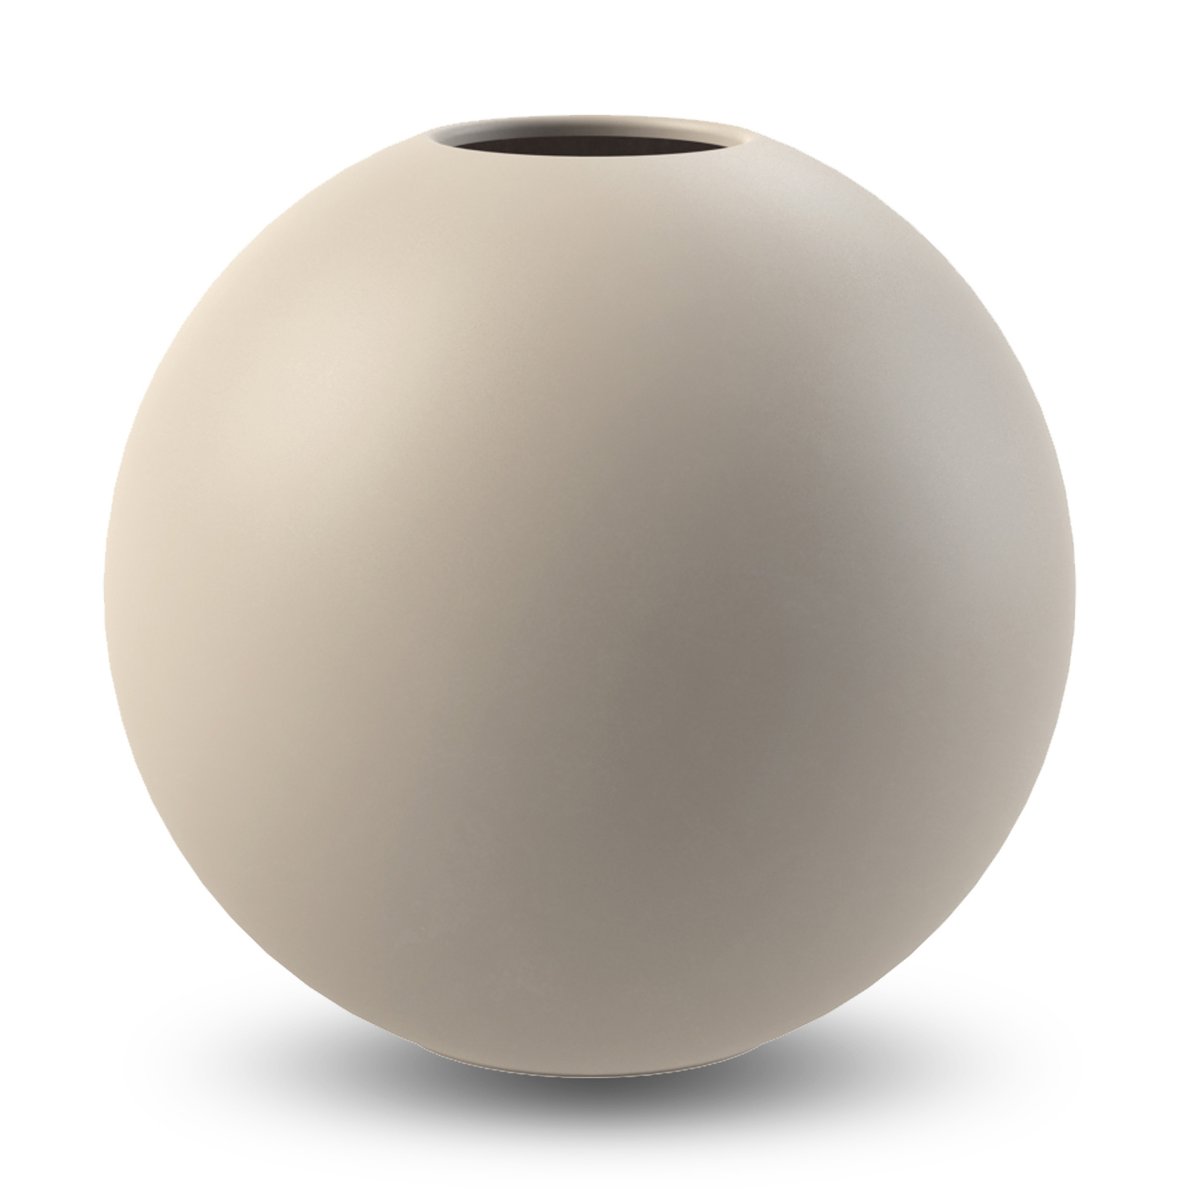 Cooee Design Ball vaas sand 30 cm.